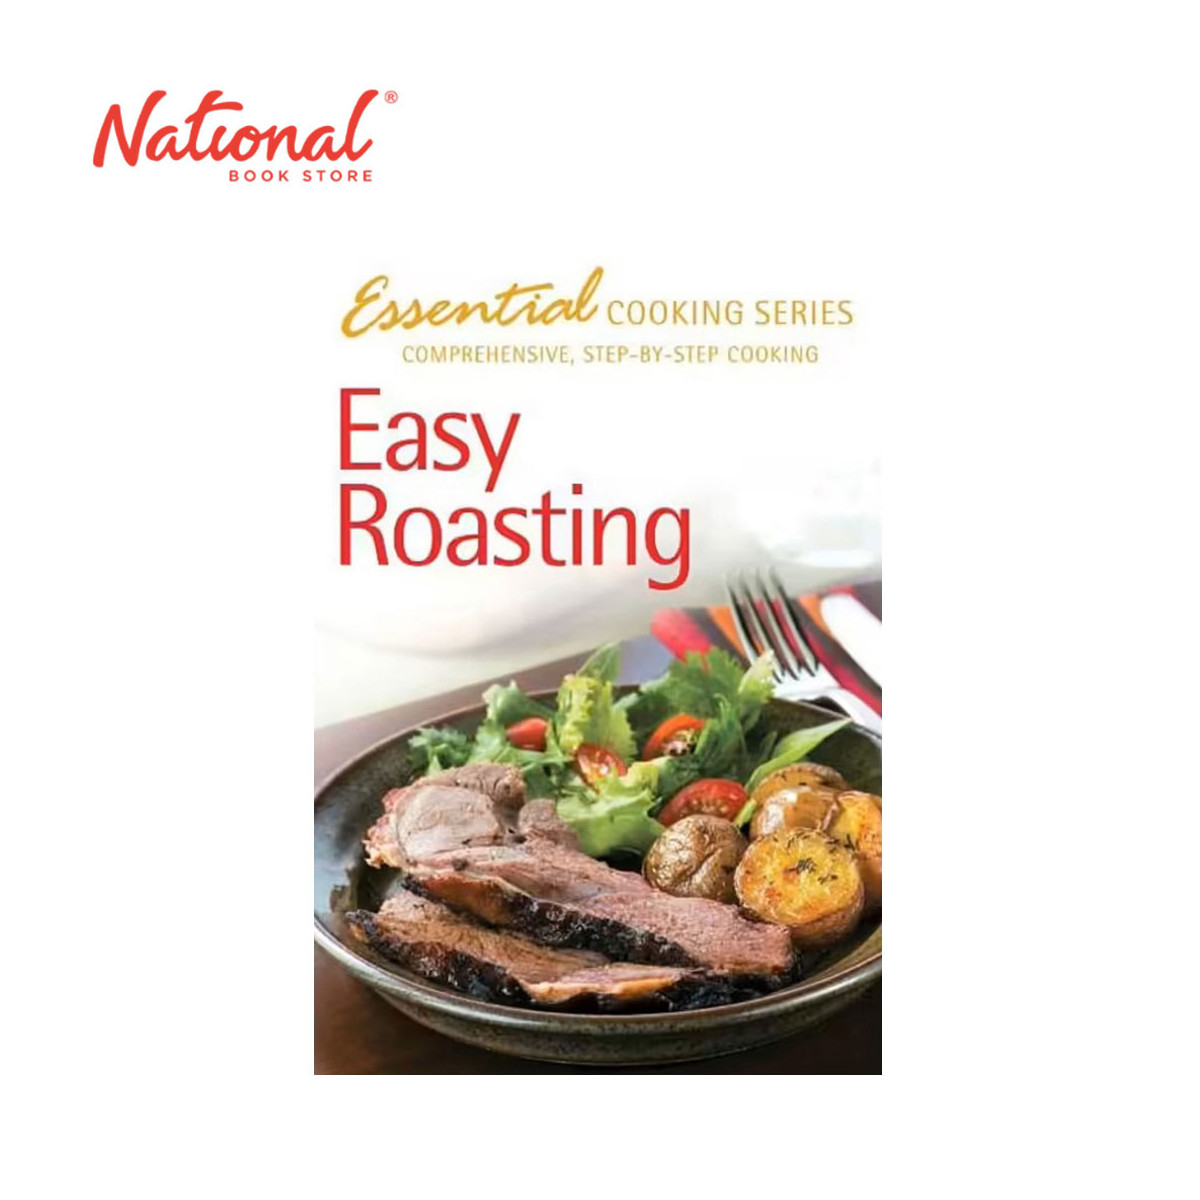 Essential Cooking: Easy Roasting by Hinkler - Trade Paperback - Cookbook